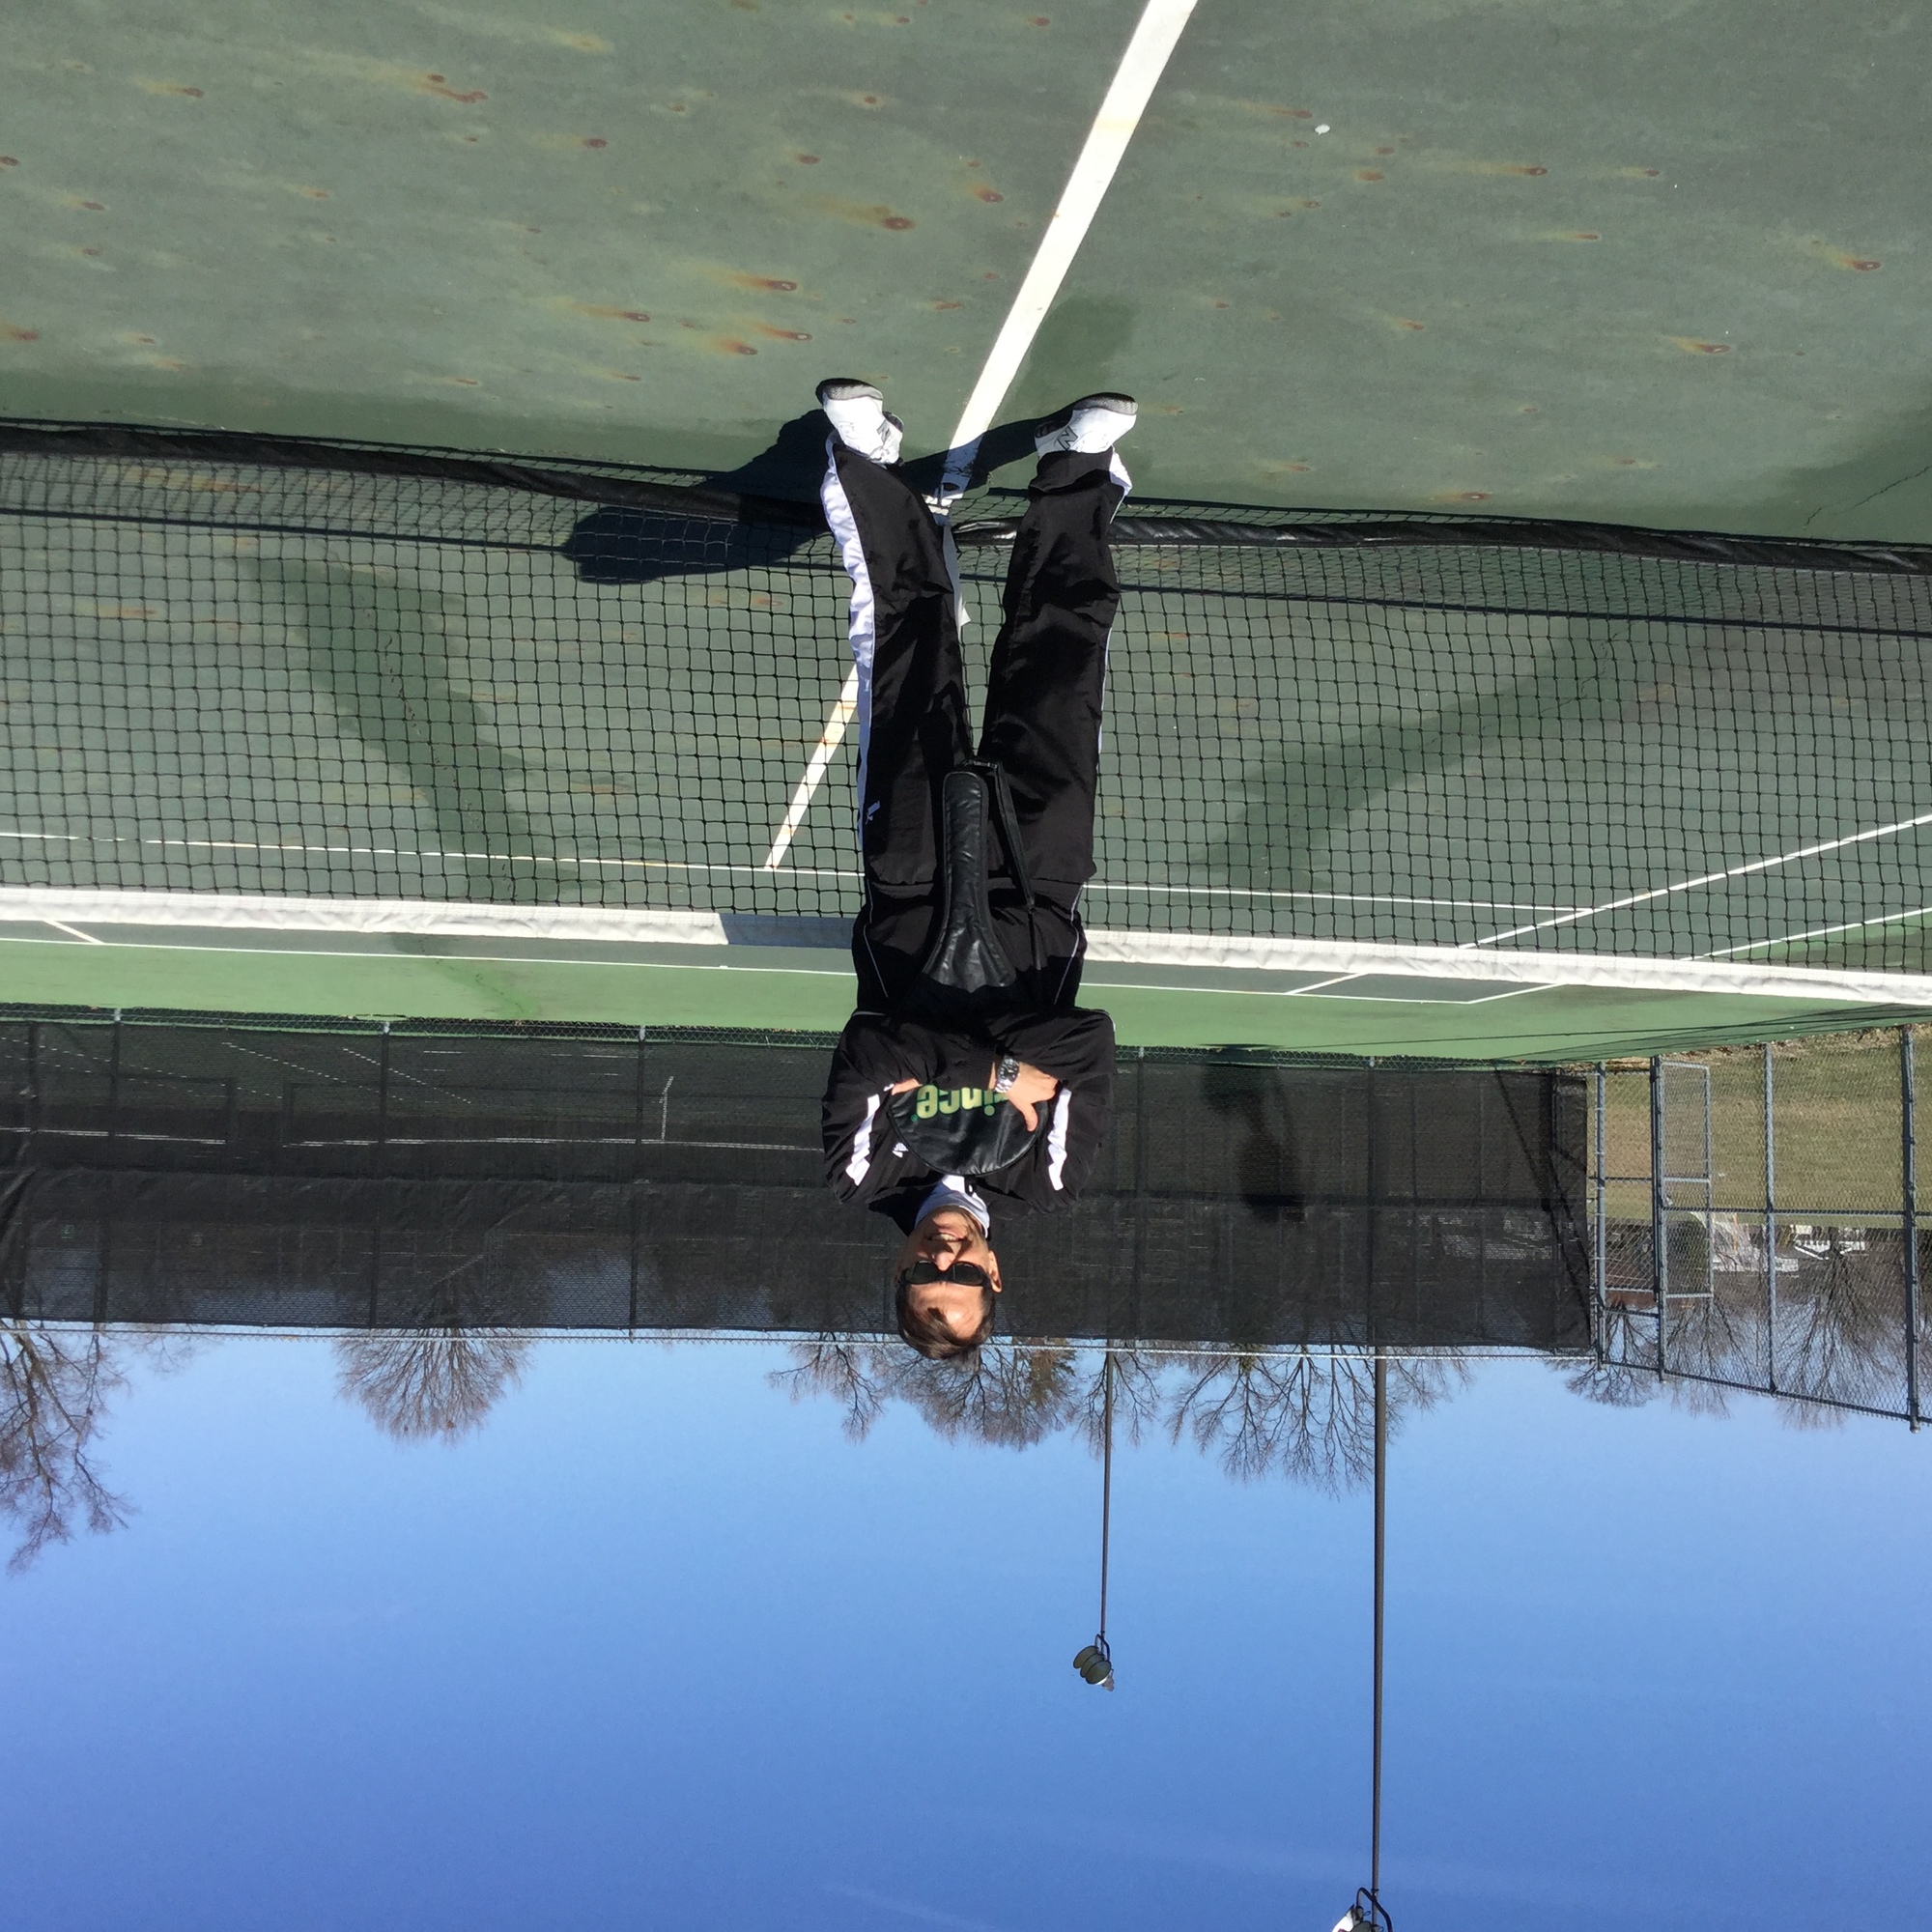 Jon G. teaches tennis lessons in Columbus, OH